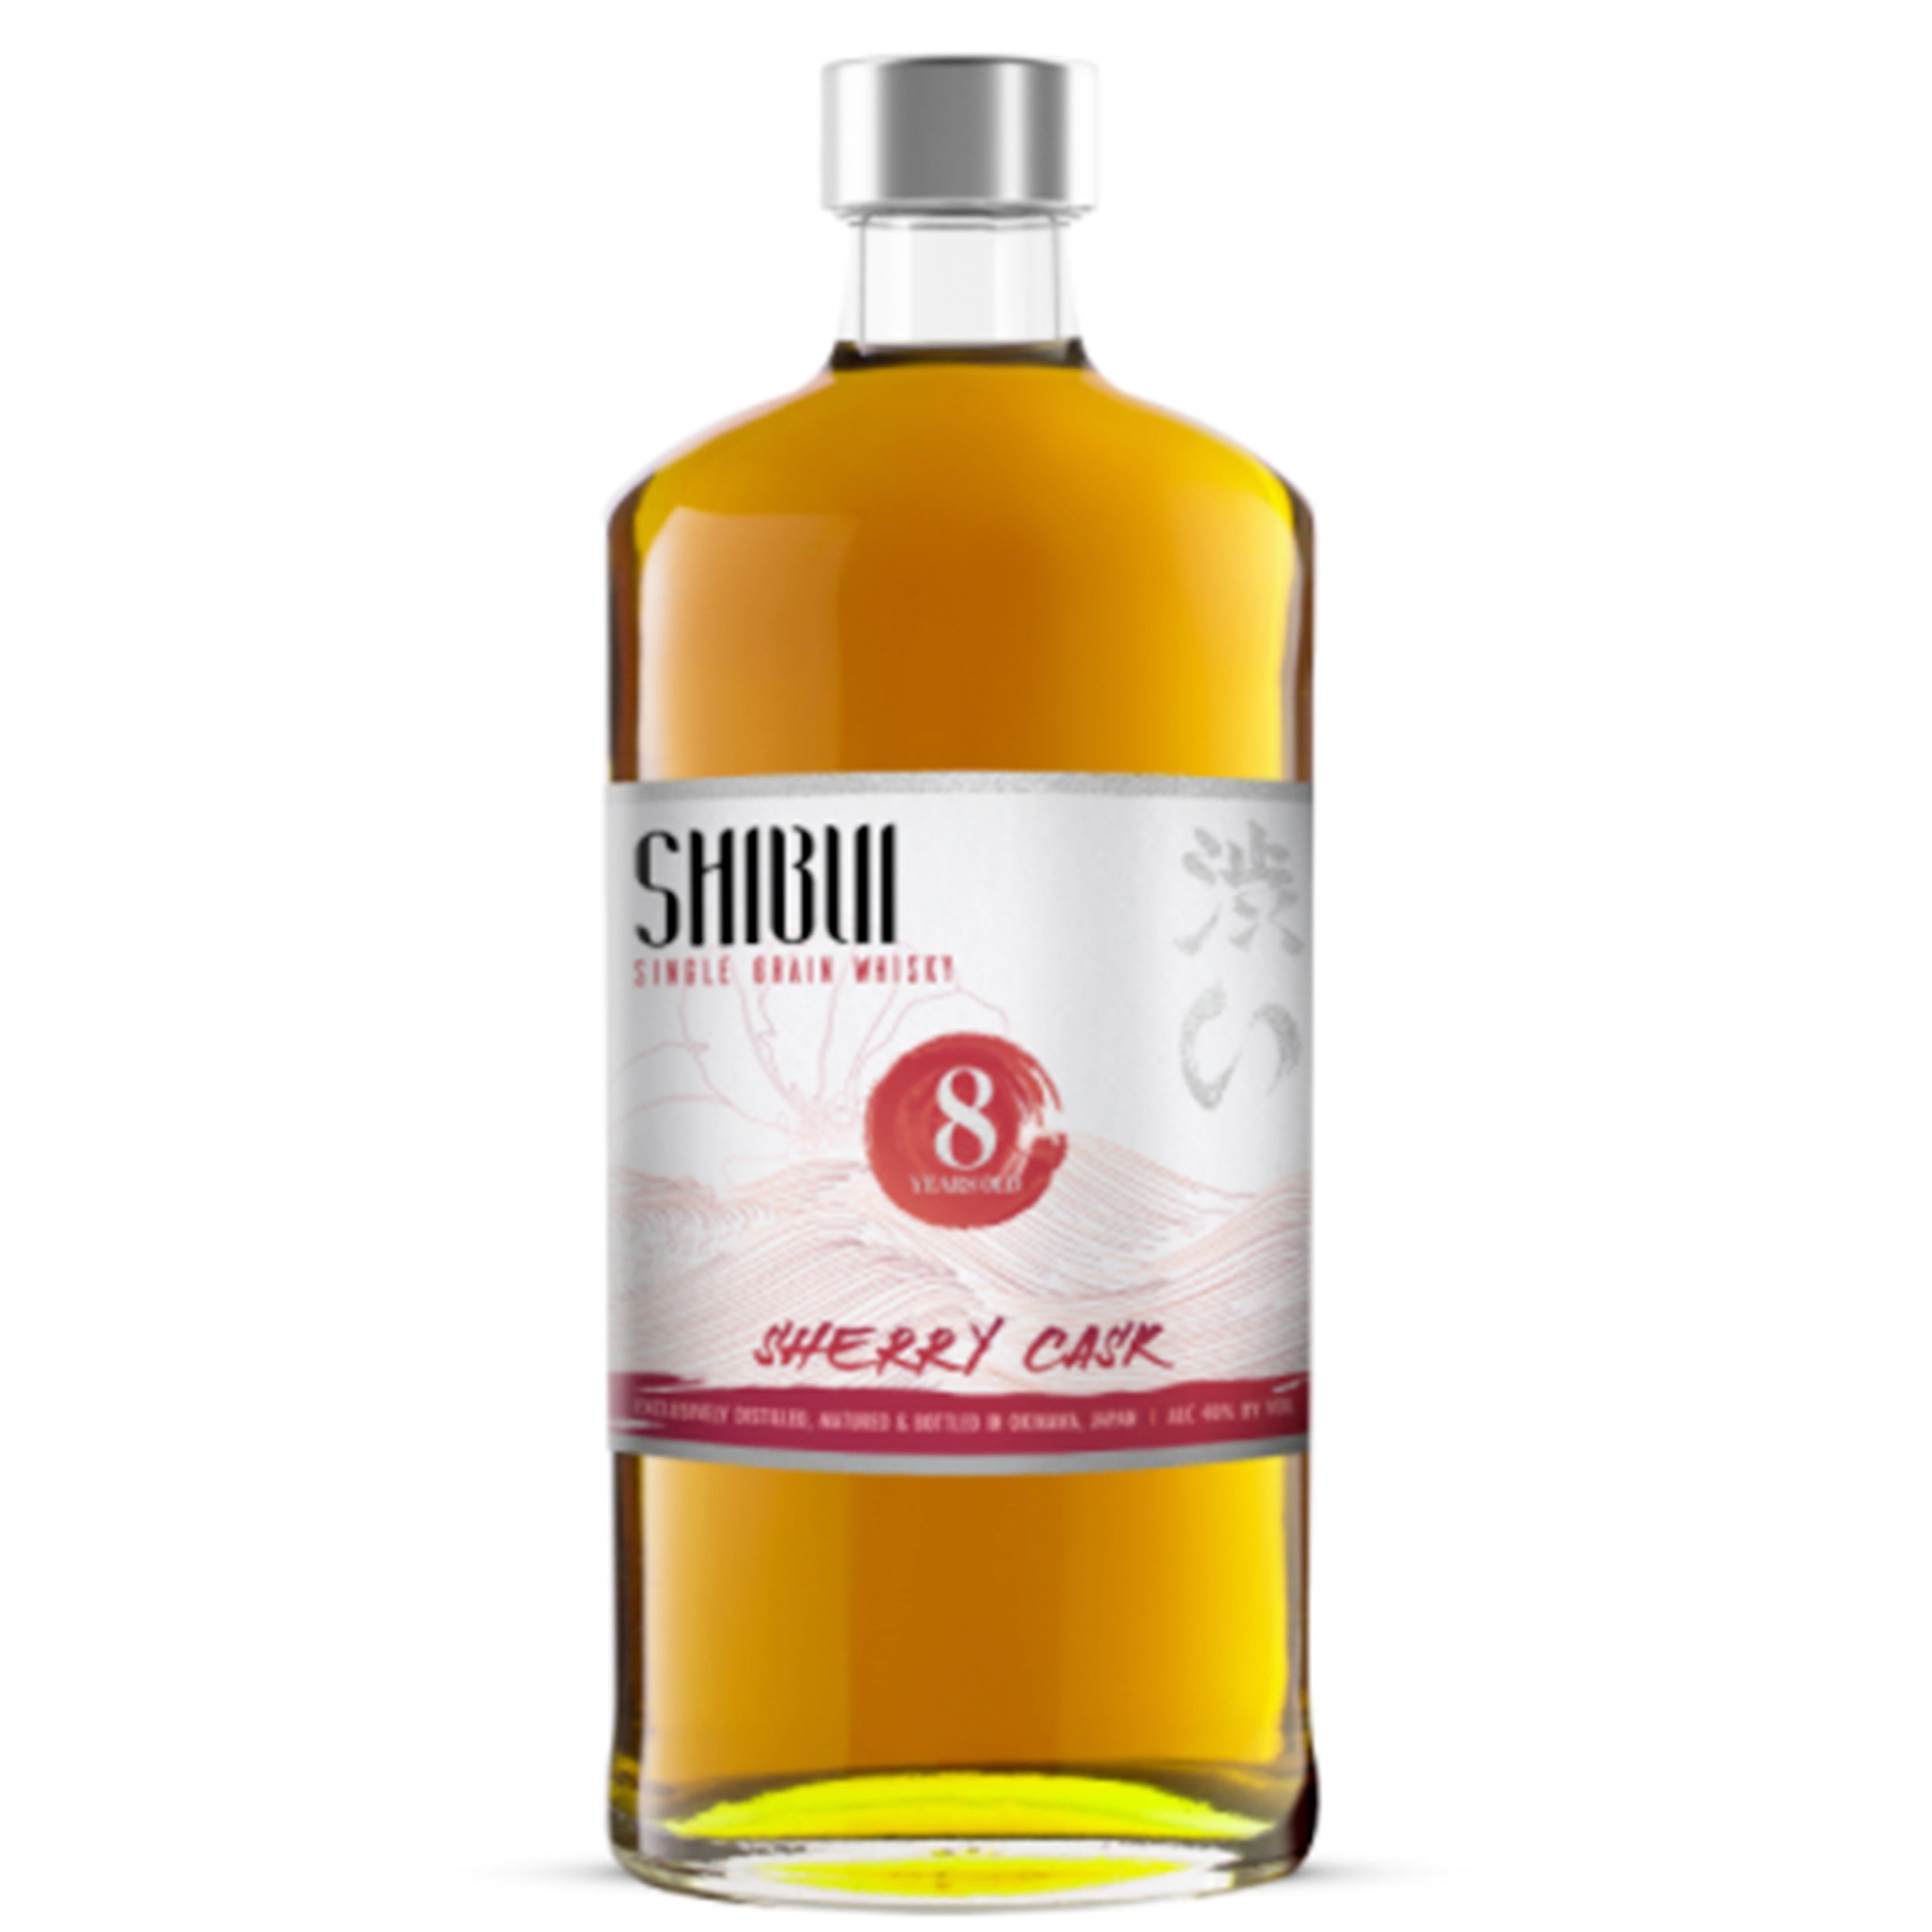 SHIBUI SINGLE GRAIN WHISKY SMALL BATCH SHERRY CASK MATURE 8 YR